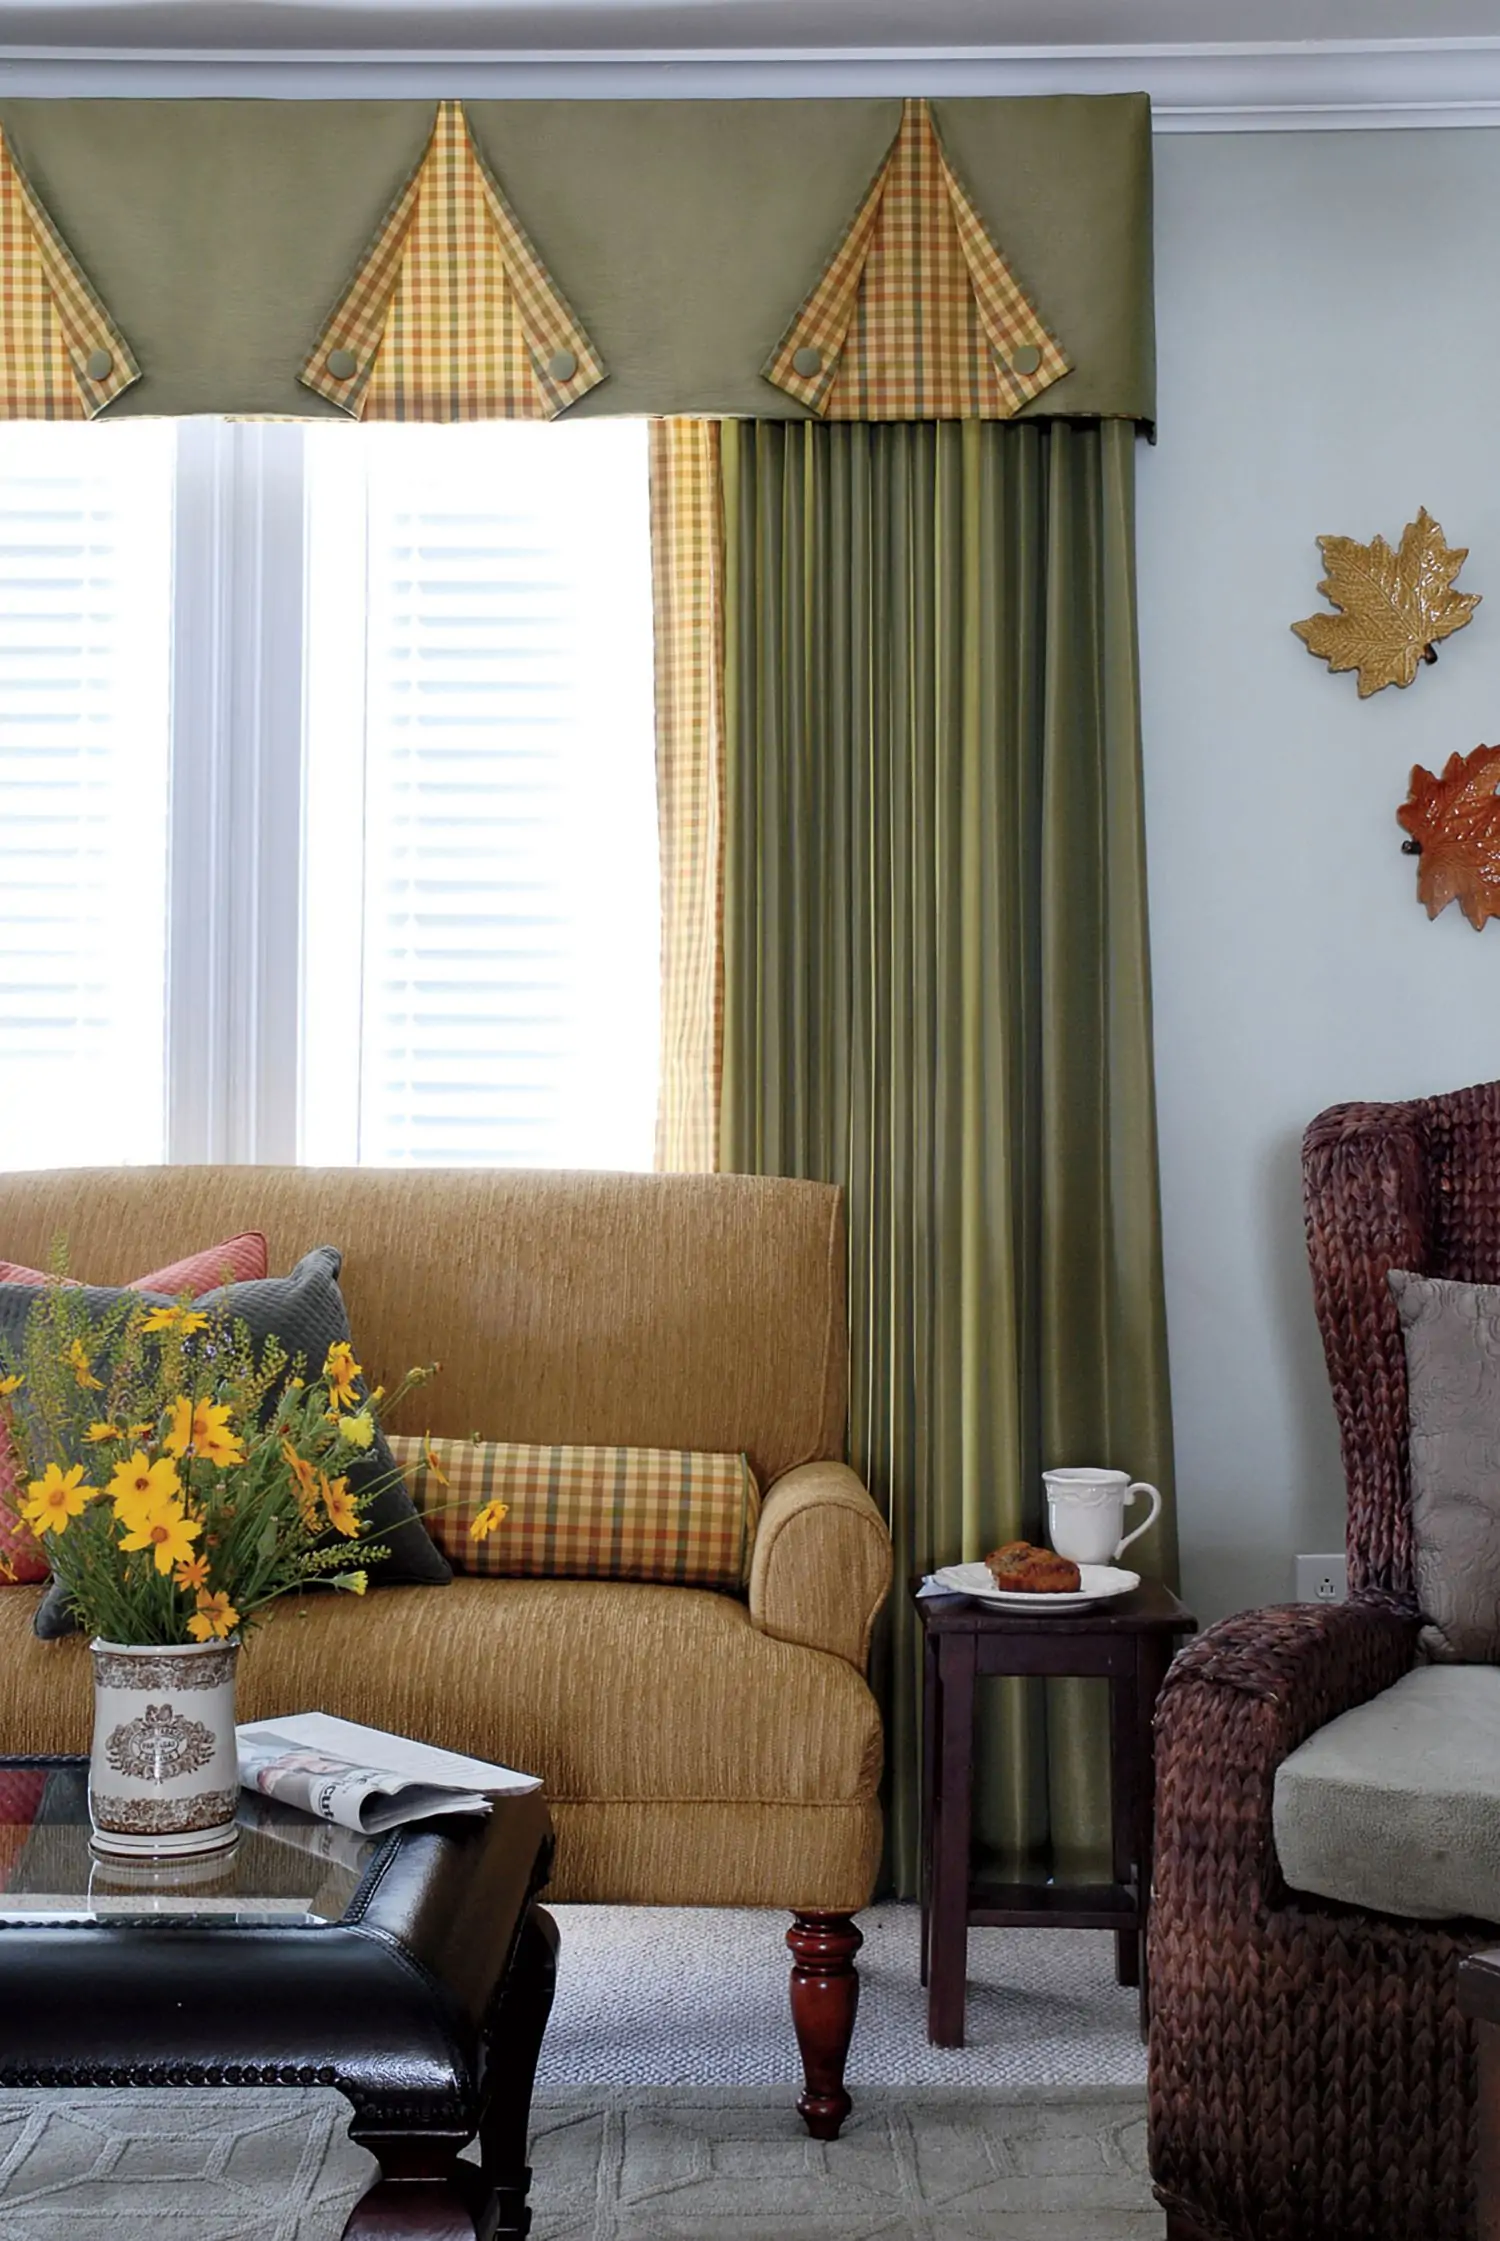 living room curtain ideas